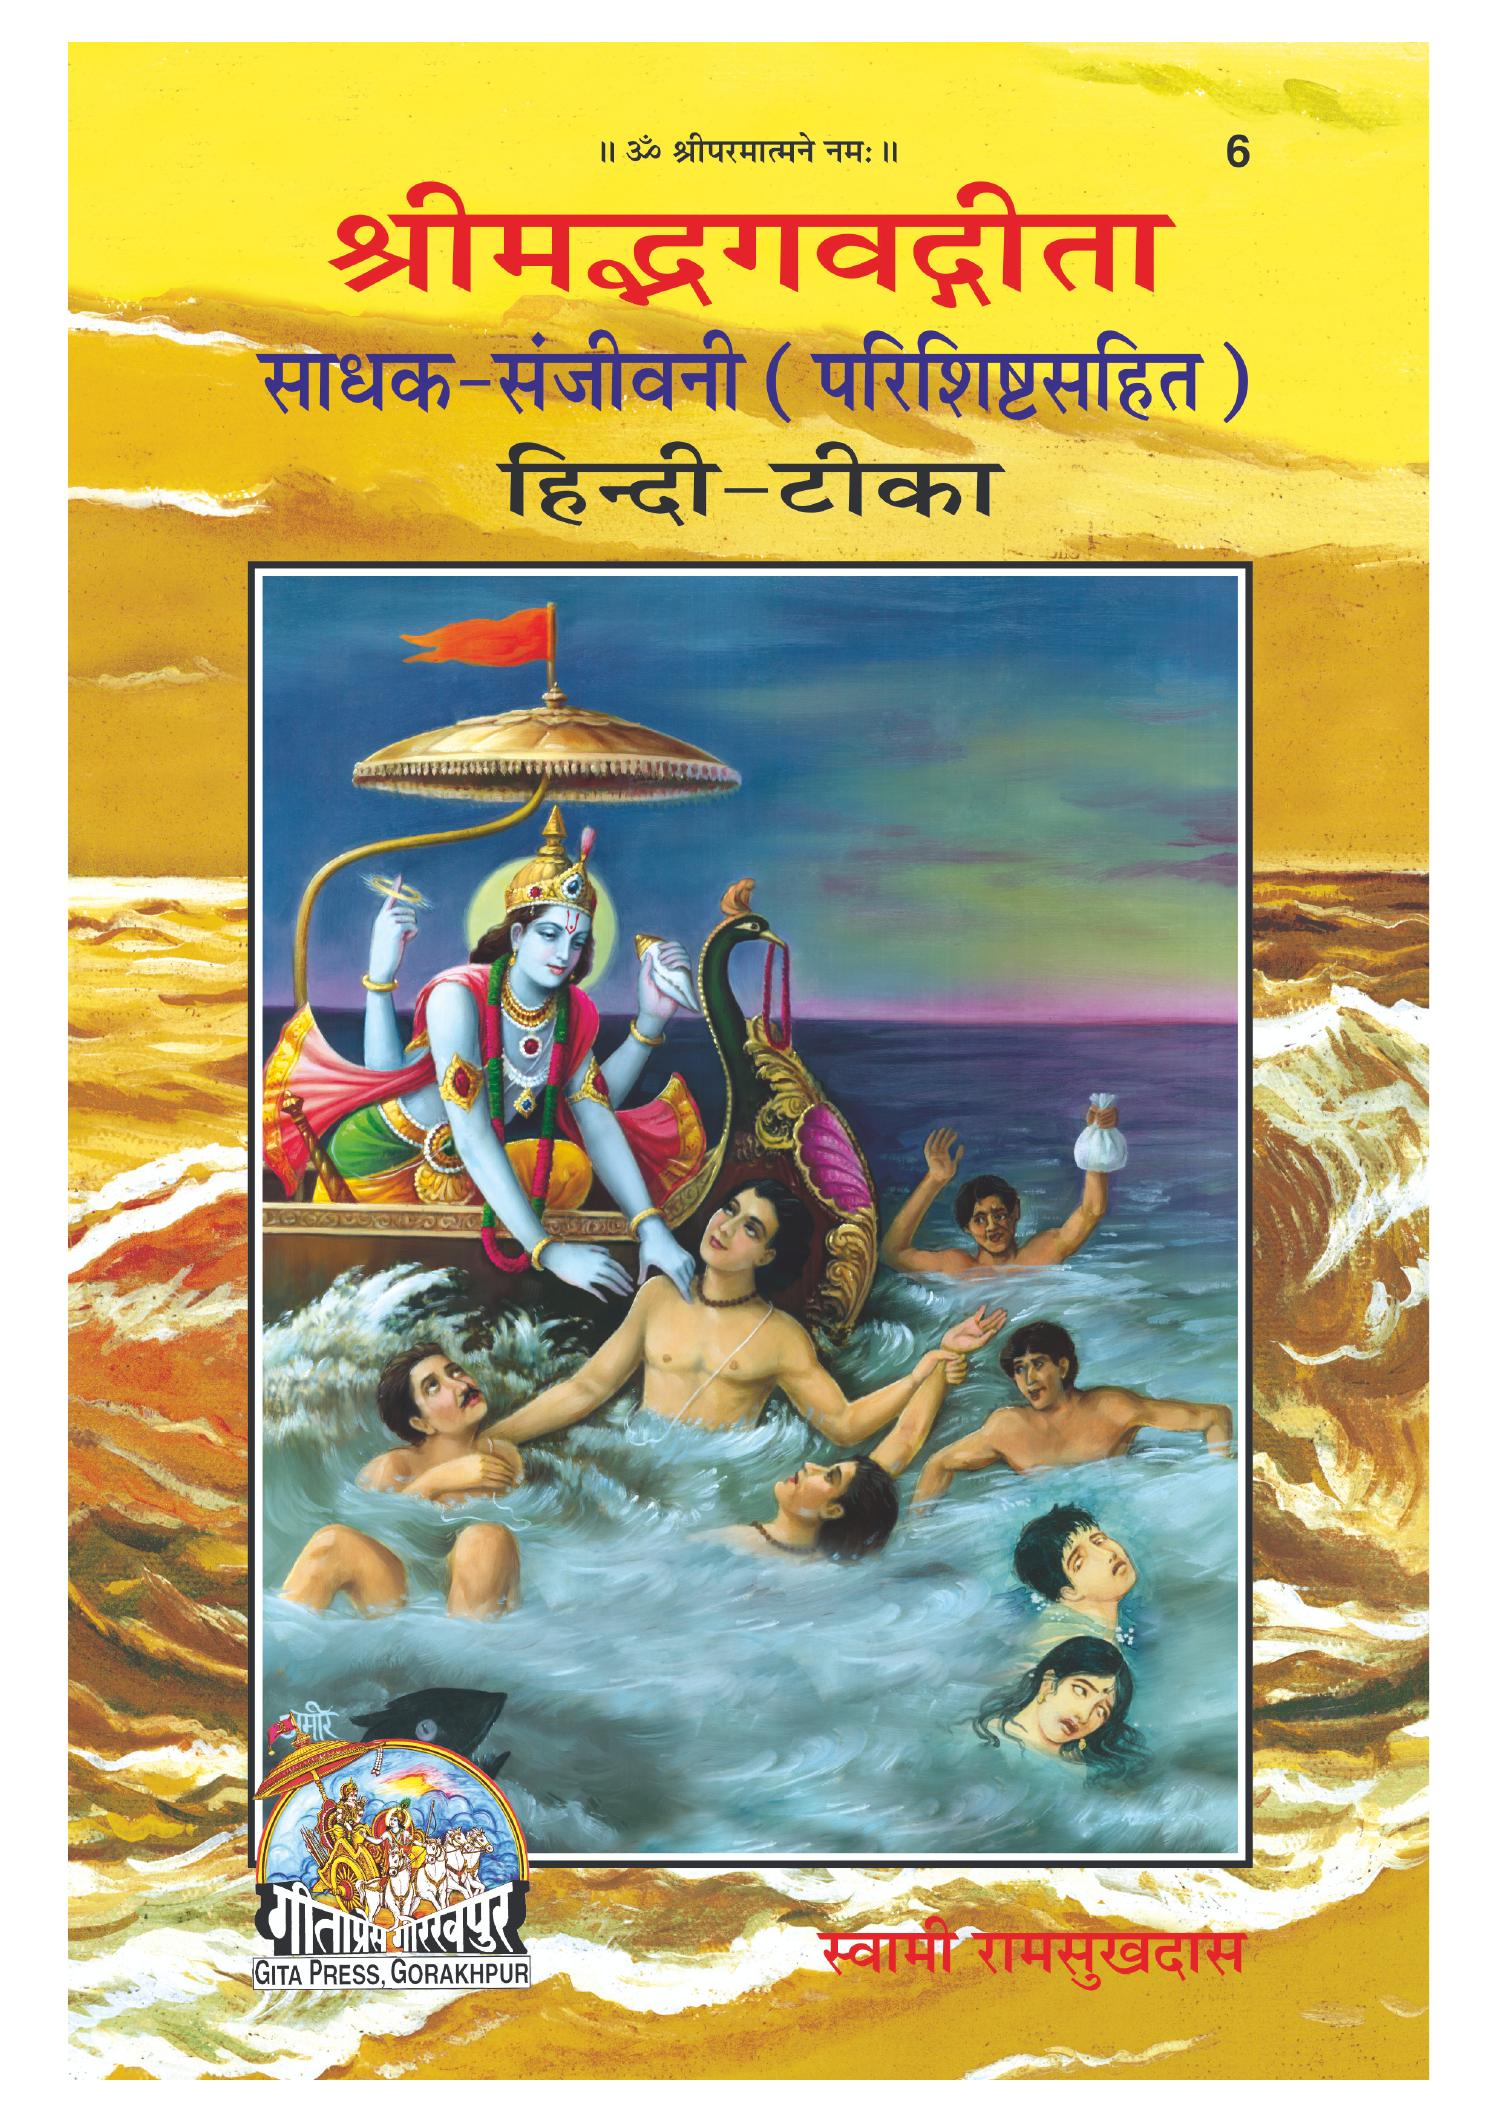 gita press gorakhpur books in hindi pdf free download